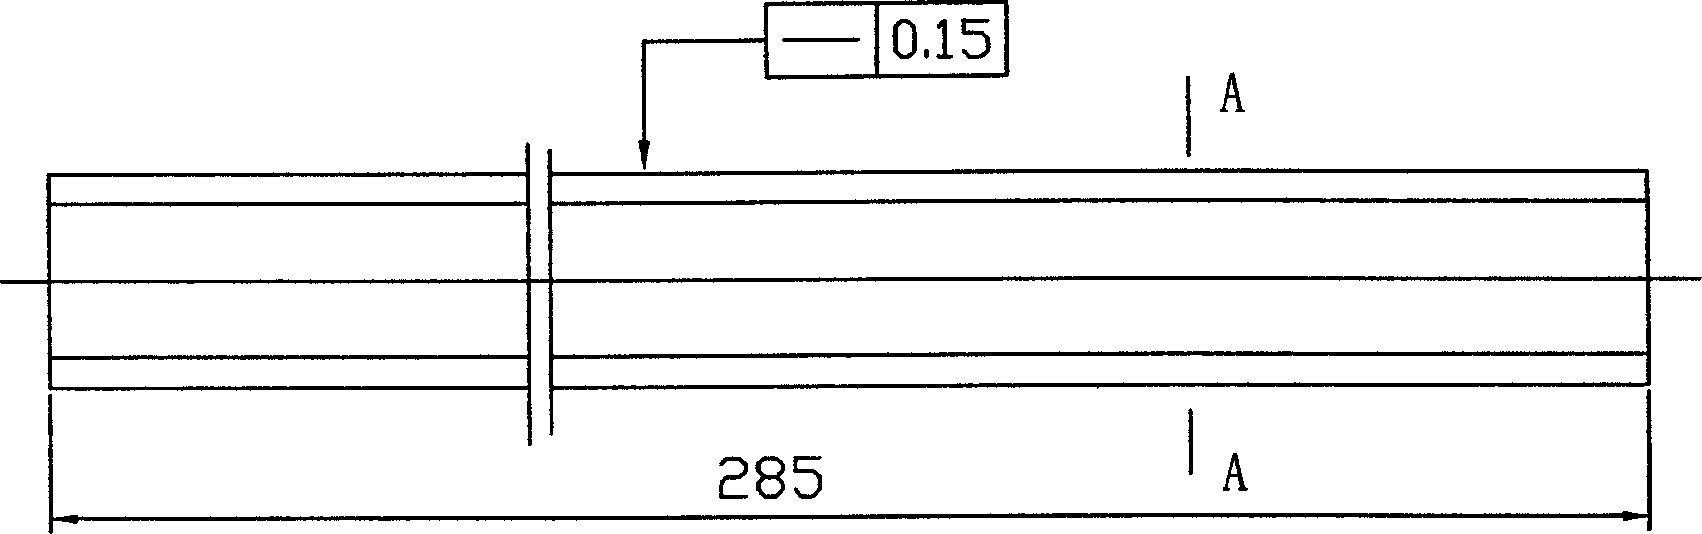 Machining method for irregular key axis blank